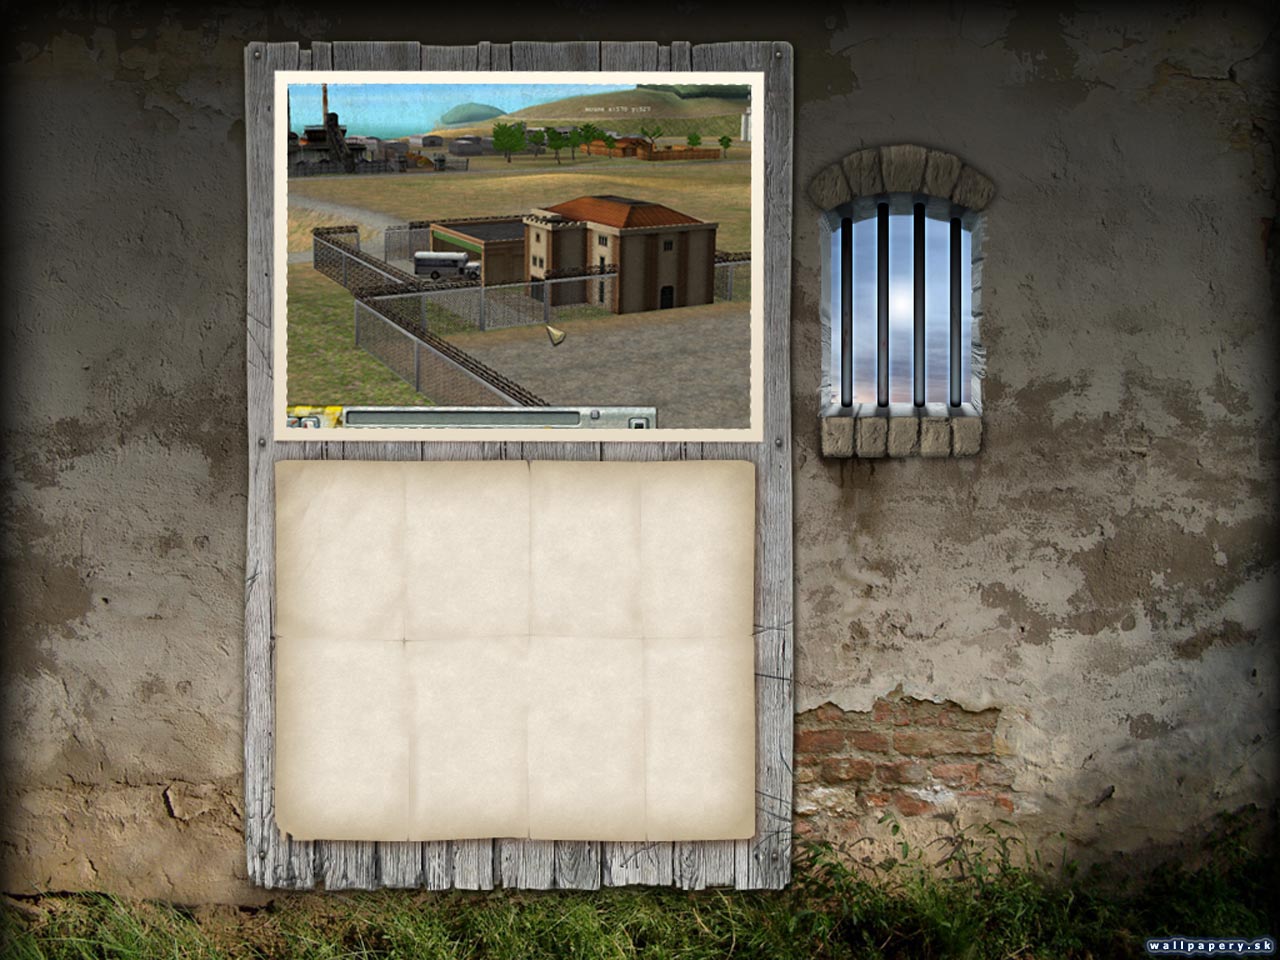 Prison Tycoon 2: Maximum Security - wallpaper 6